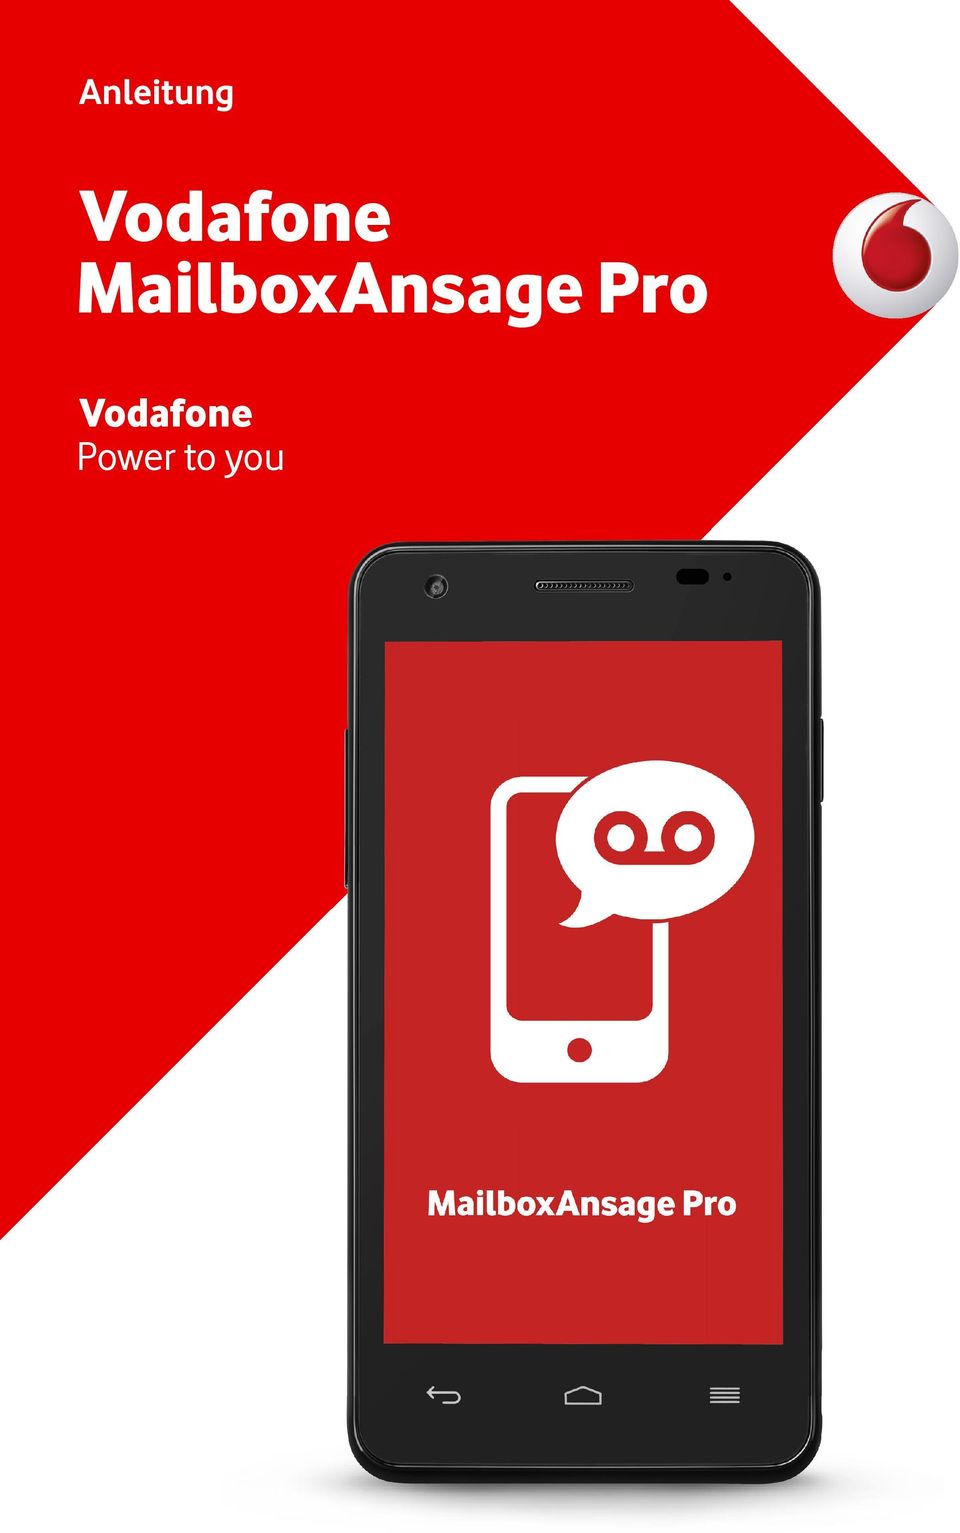 MailboxAnsage